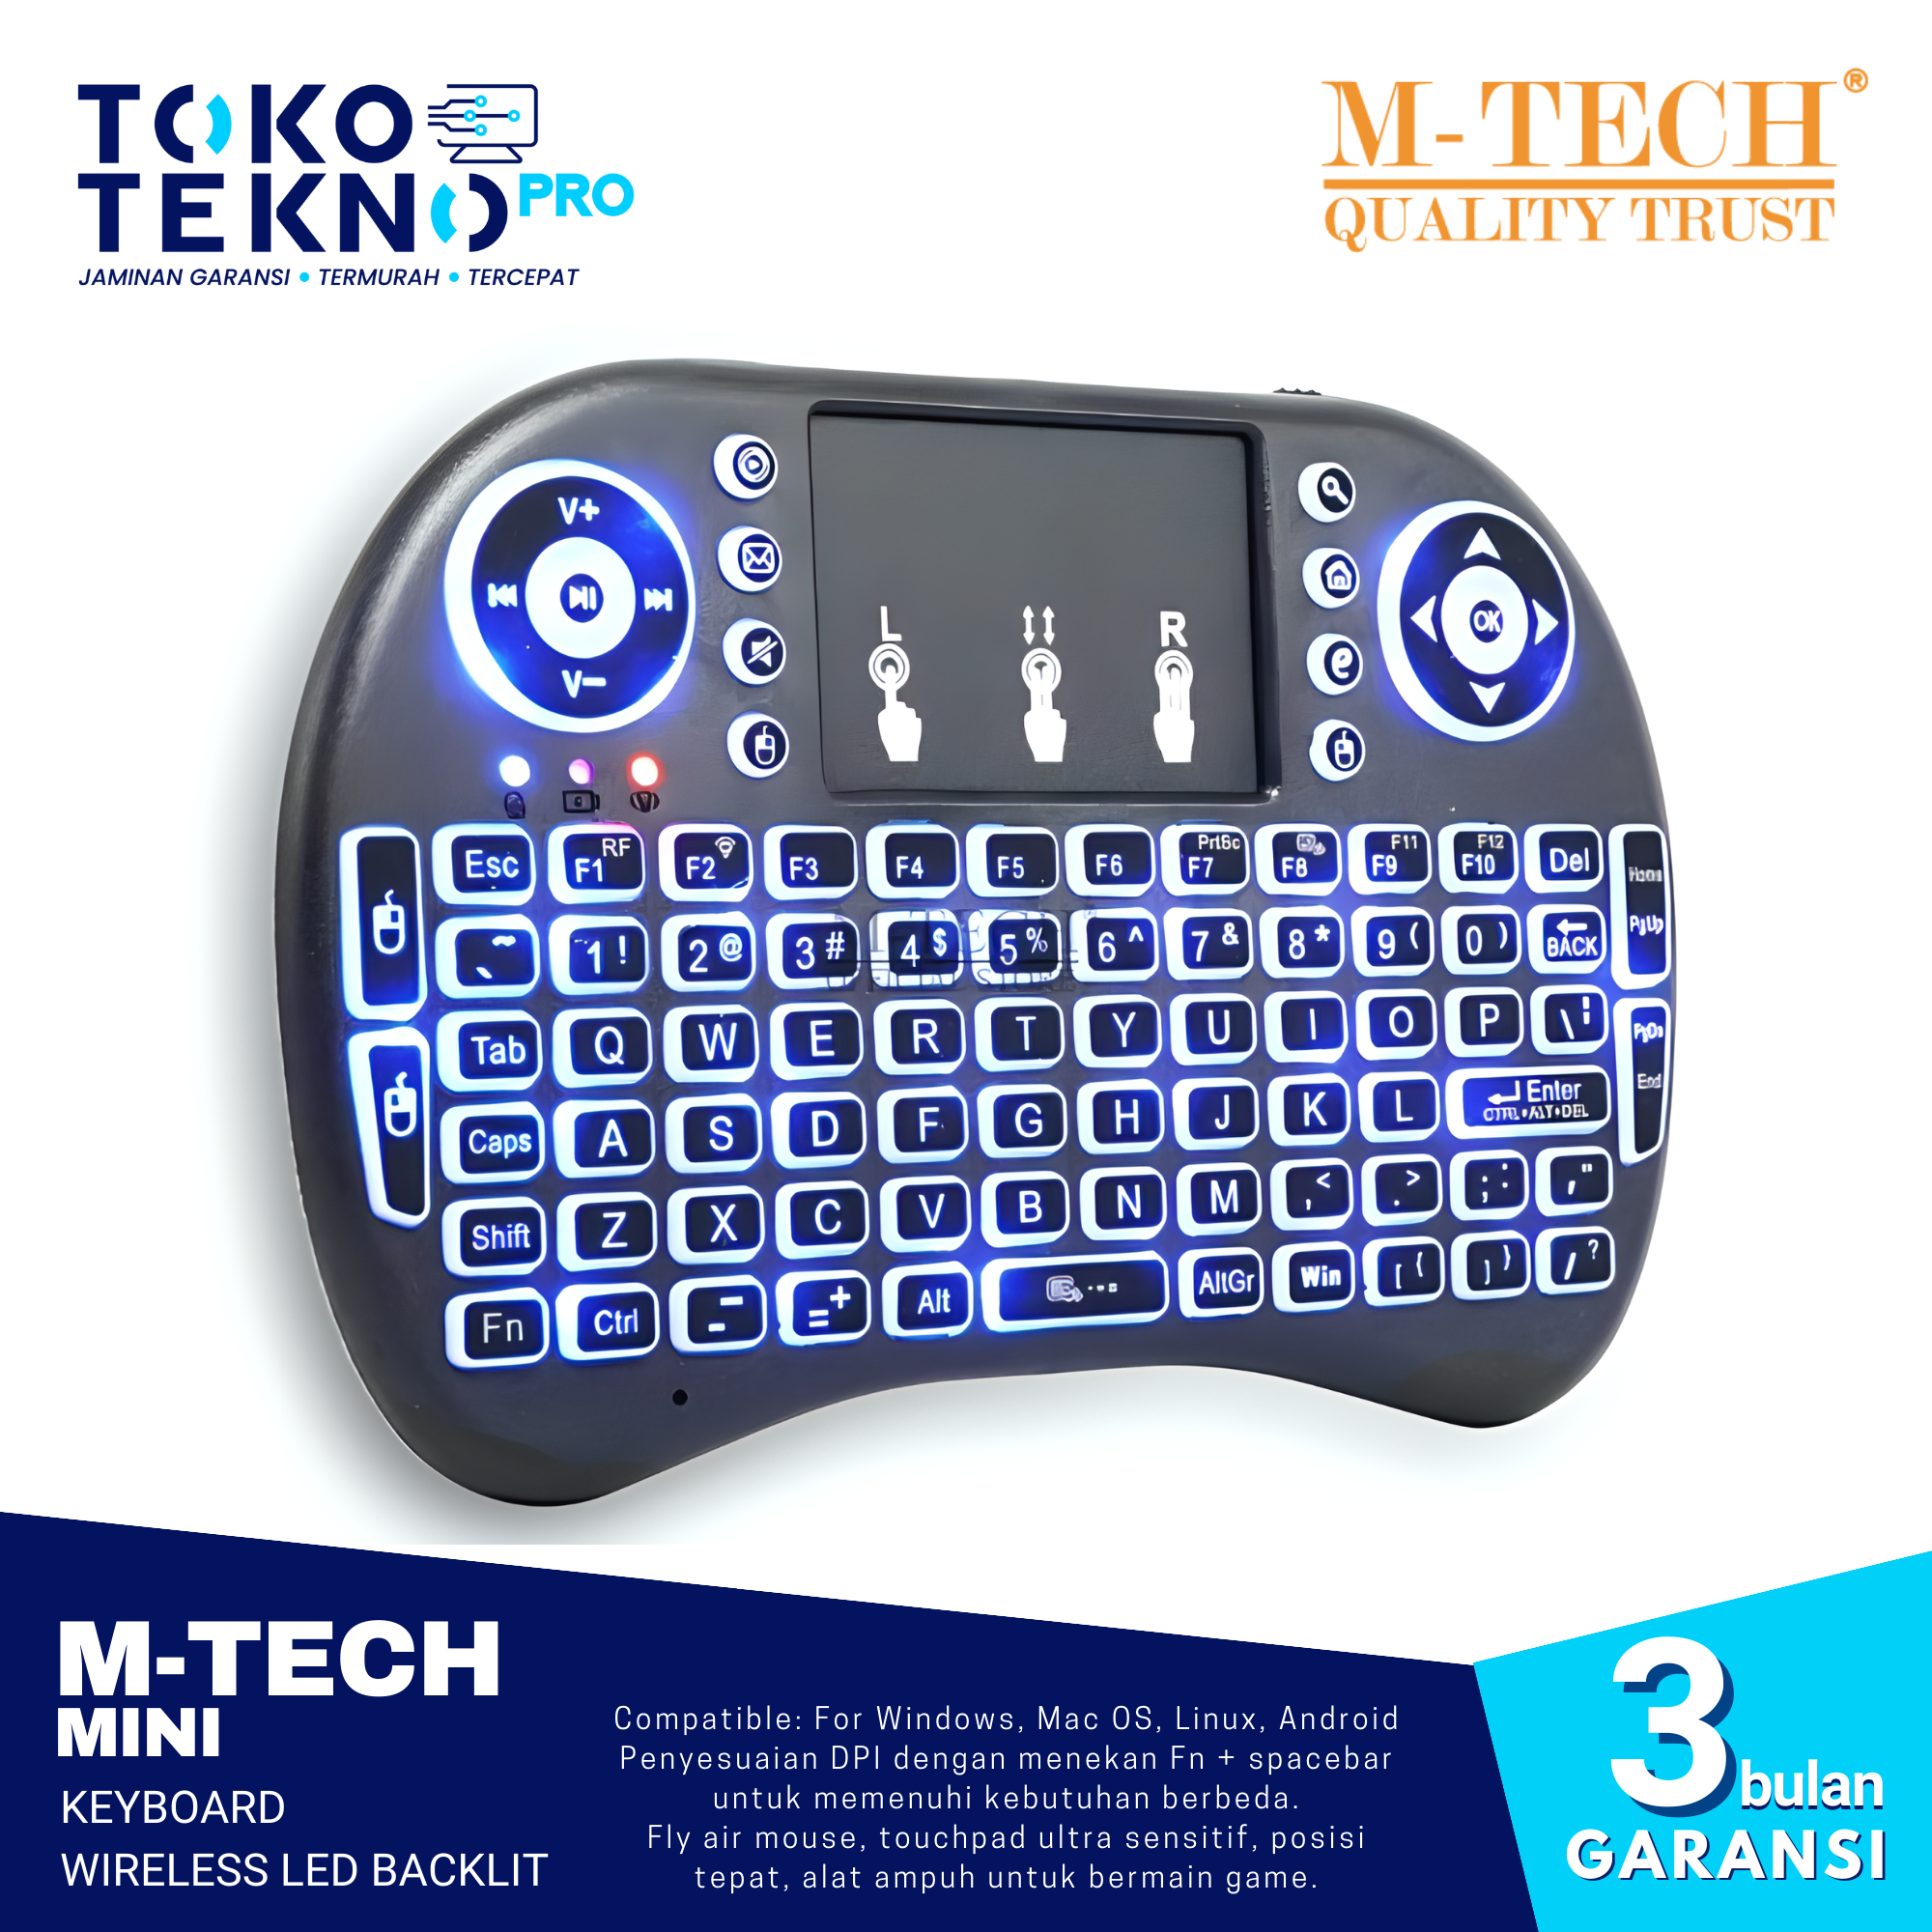 M-Tech Mini Keyboard Wireless LED Backlit 